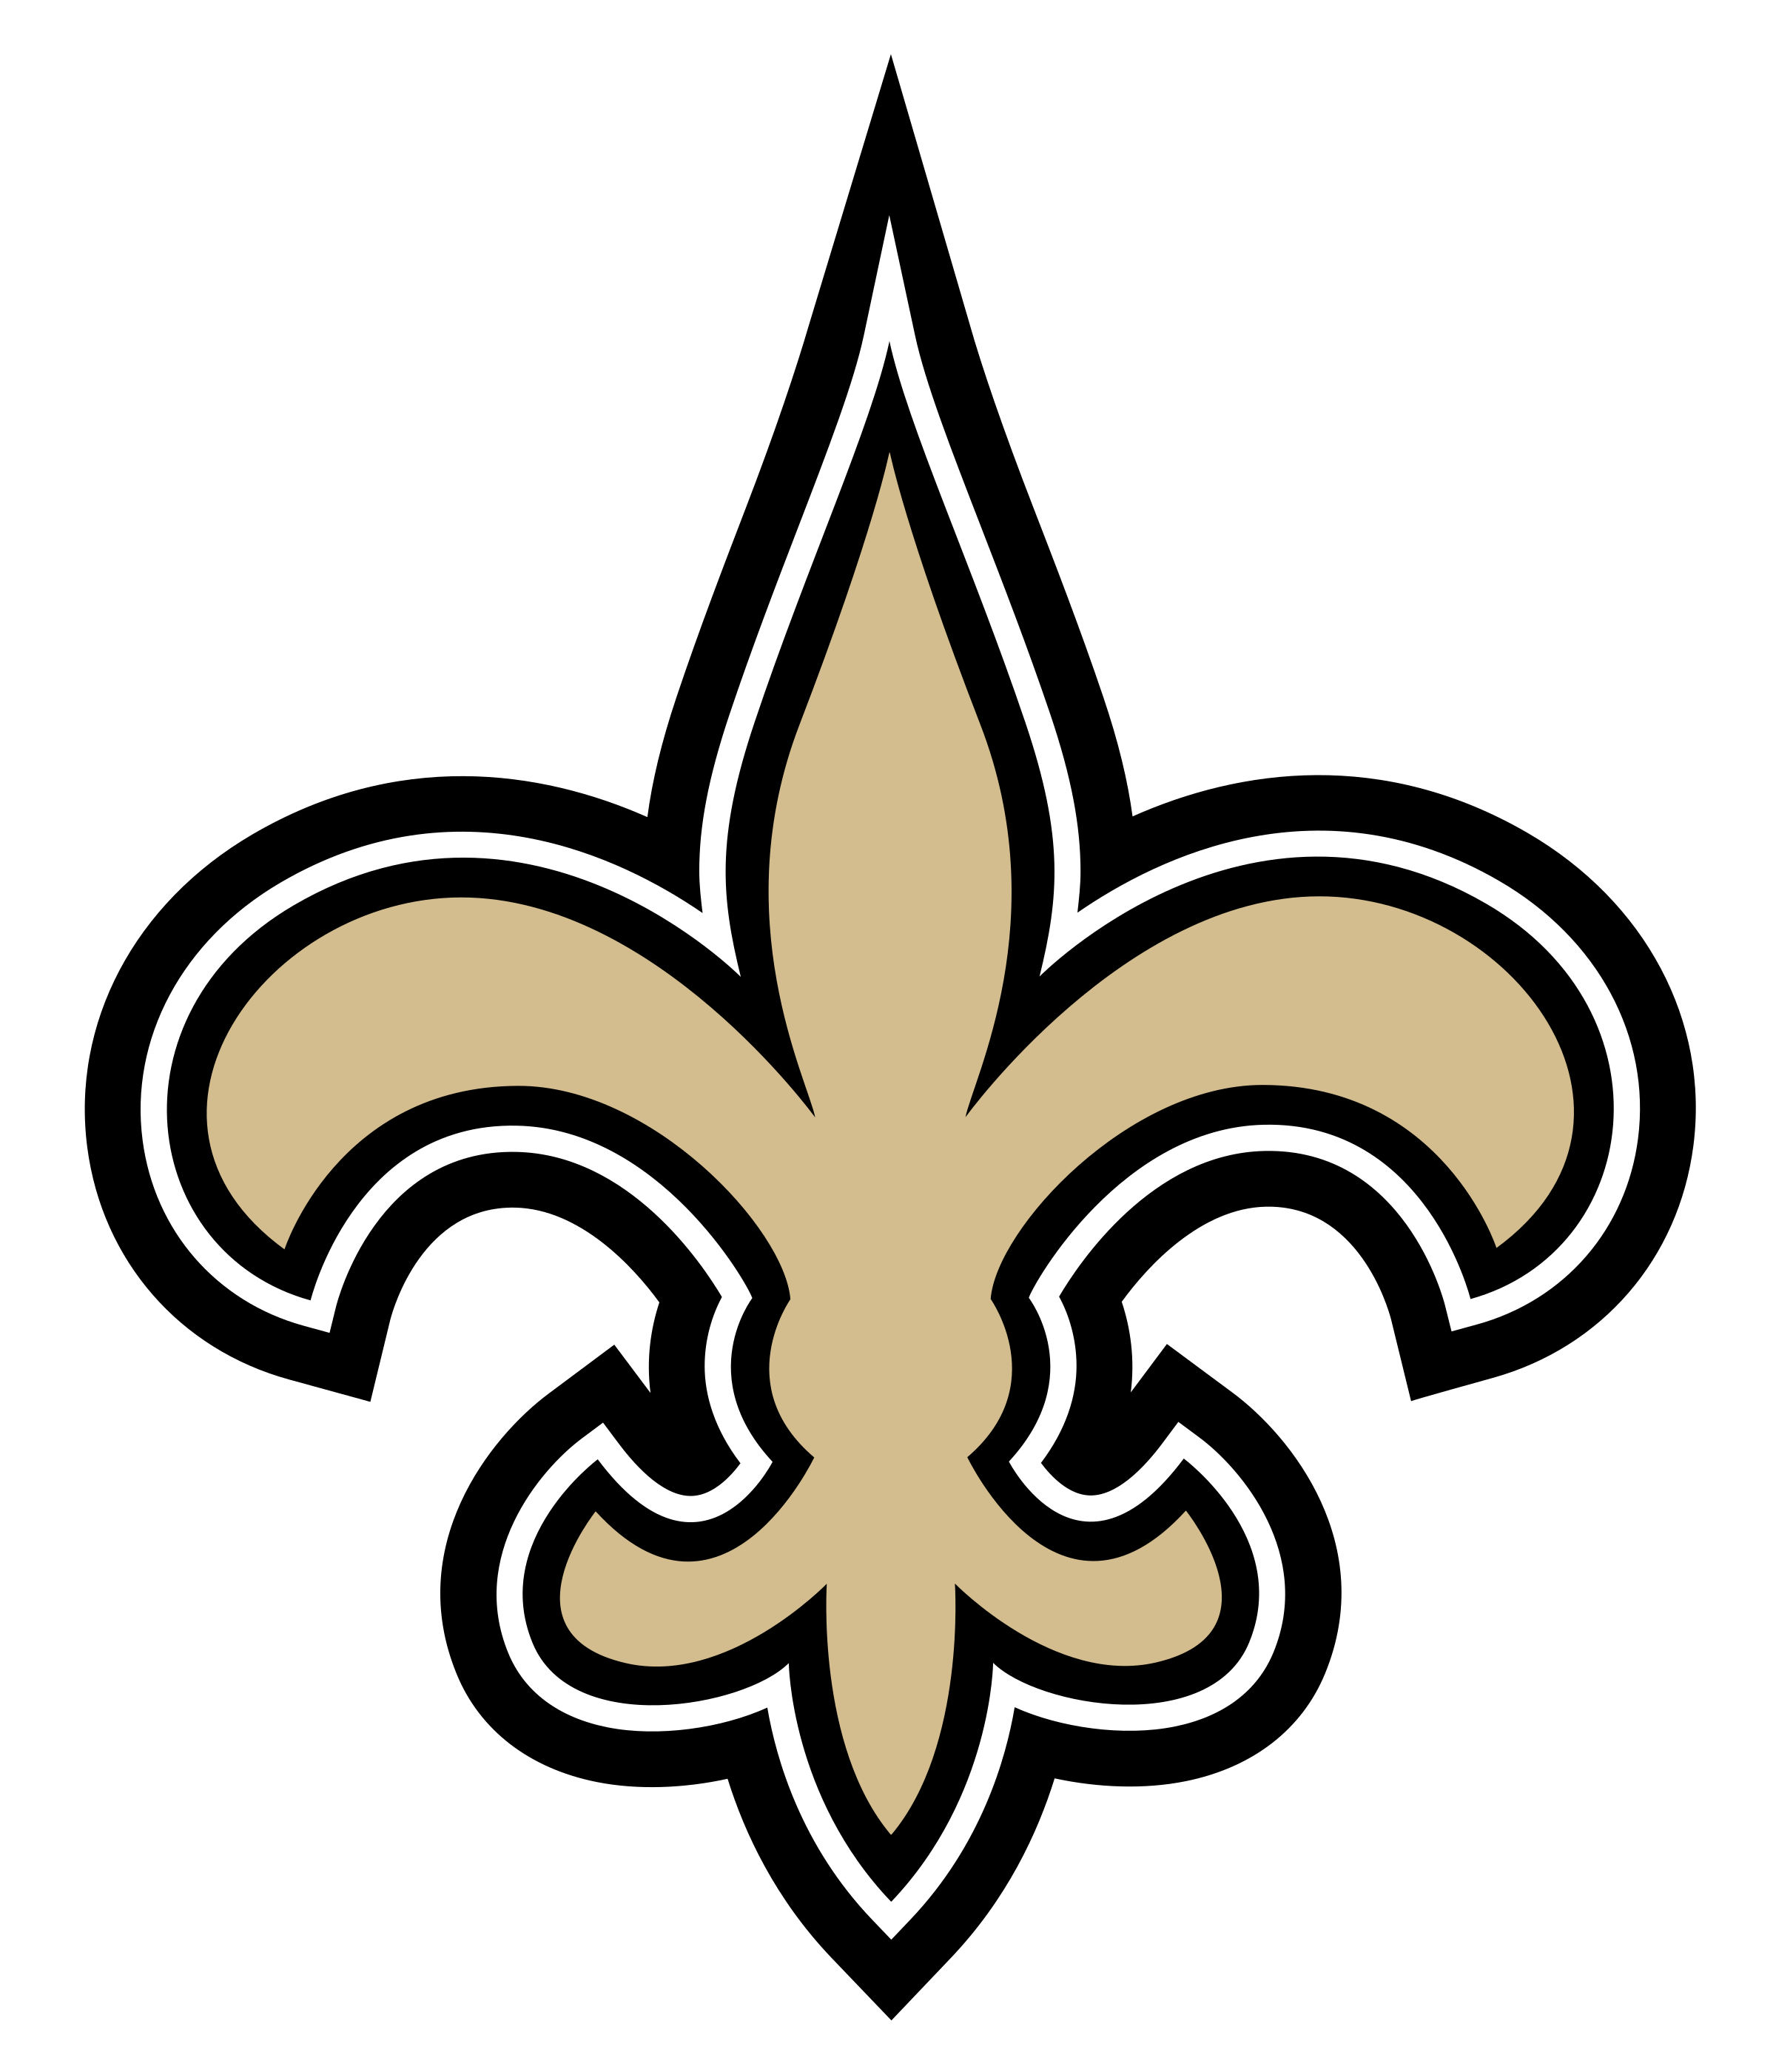 NFL Saints Logo - New Orleans Saints Logo PNG Transparent & SVG Vector - Freebie Supply